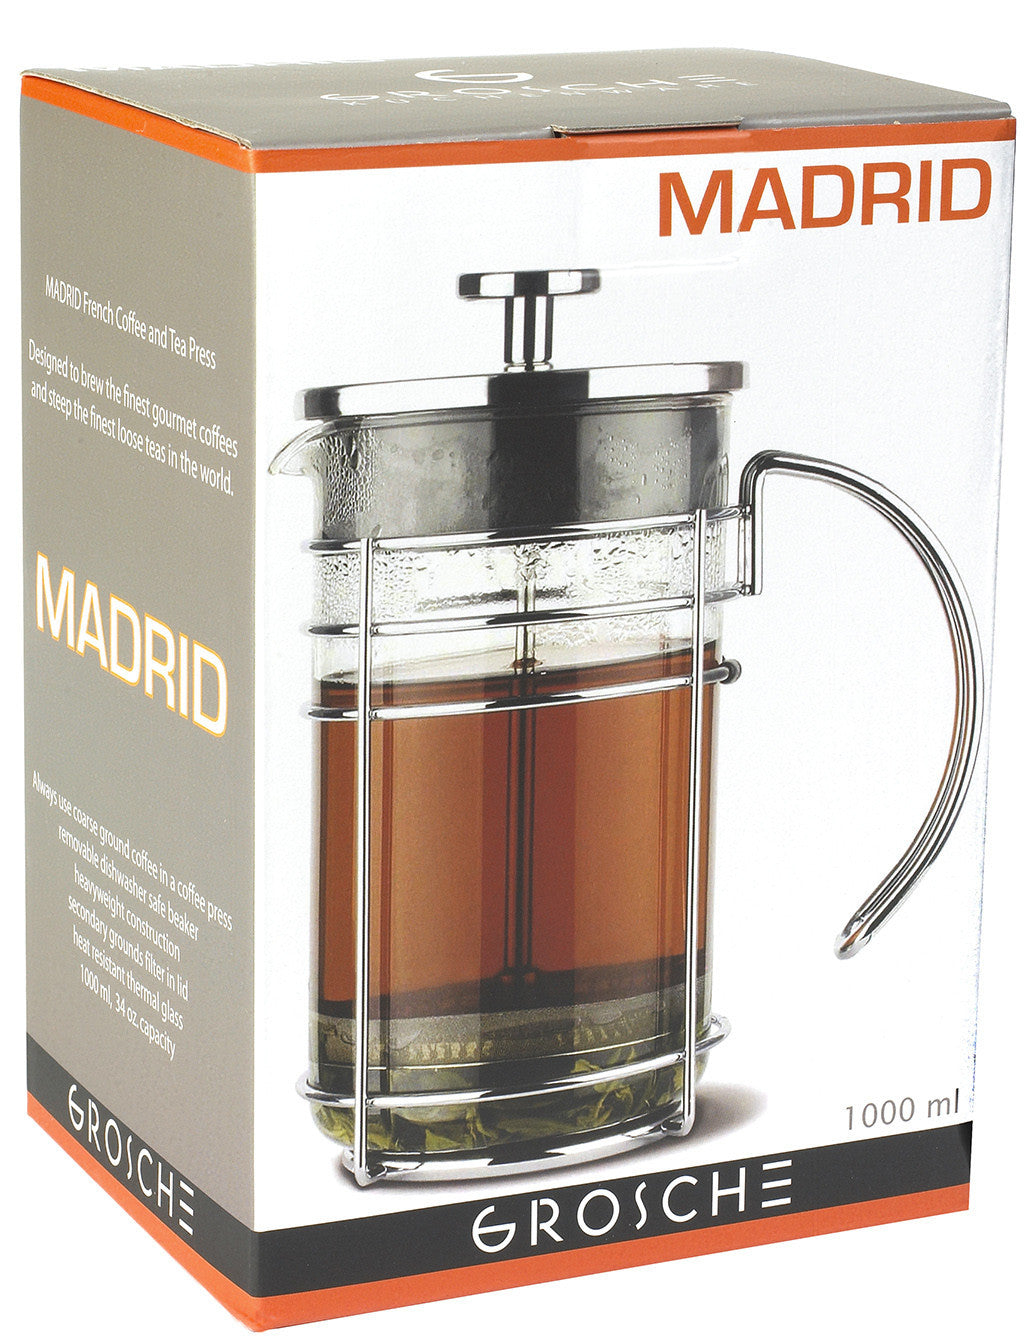 GROSCHE Madrid French Press Coffee Maker - 34 oz. - Gently Used - Tea Press